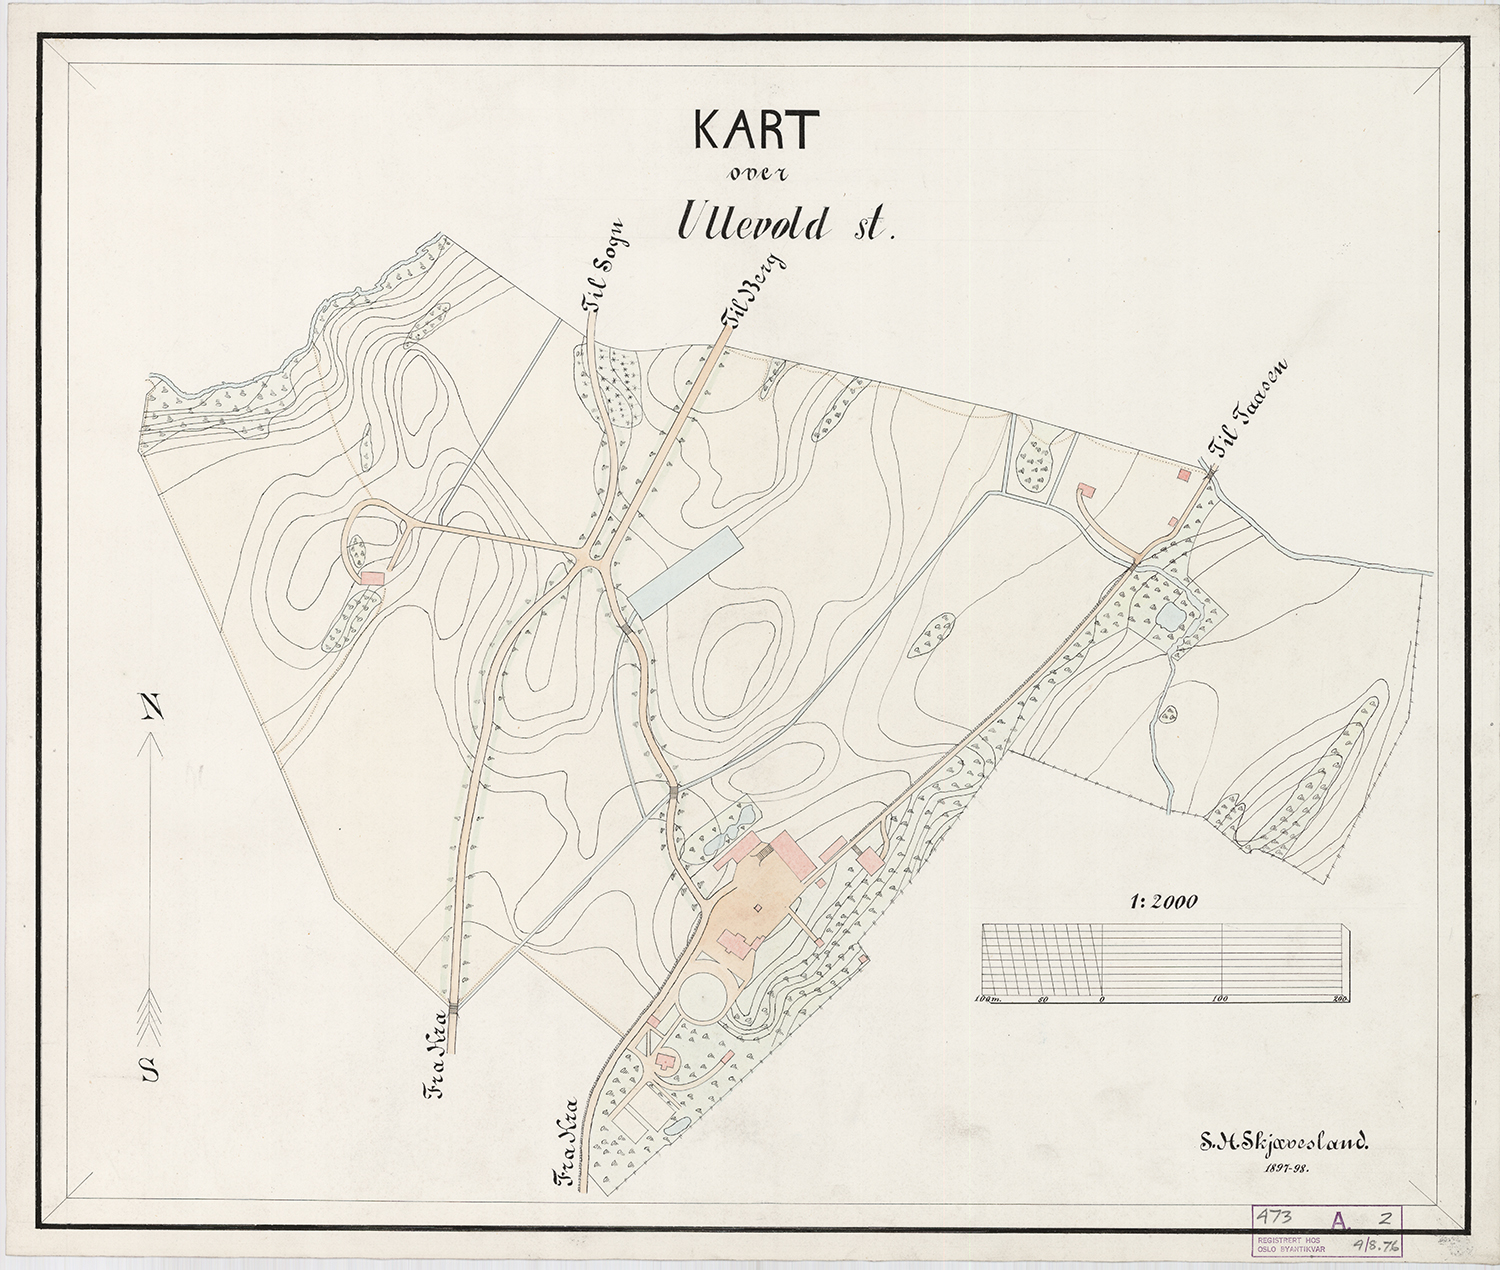 Kart over Ullevål store 1897-98